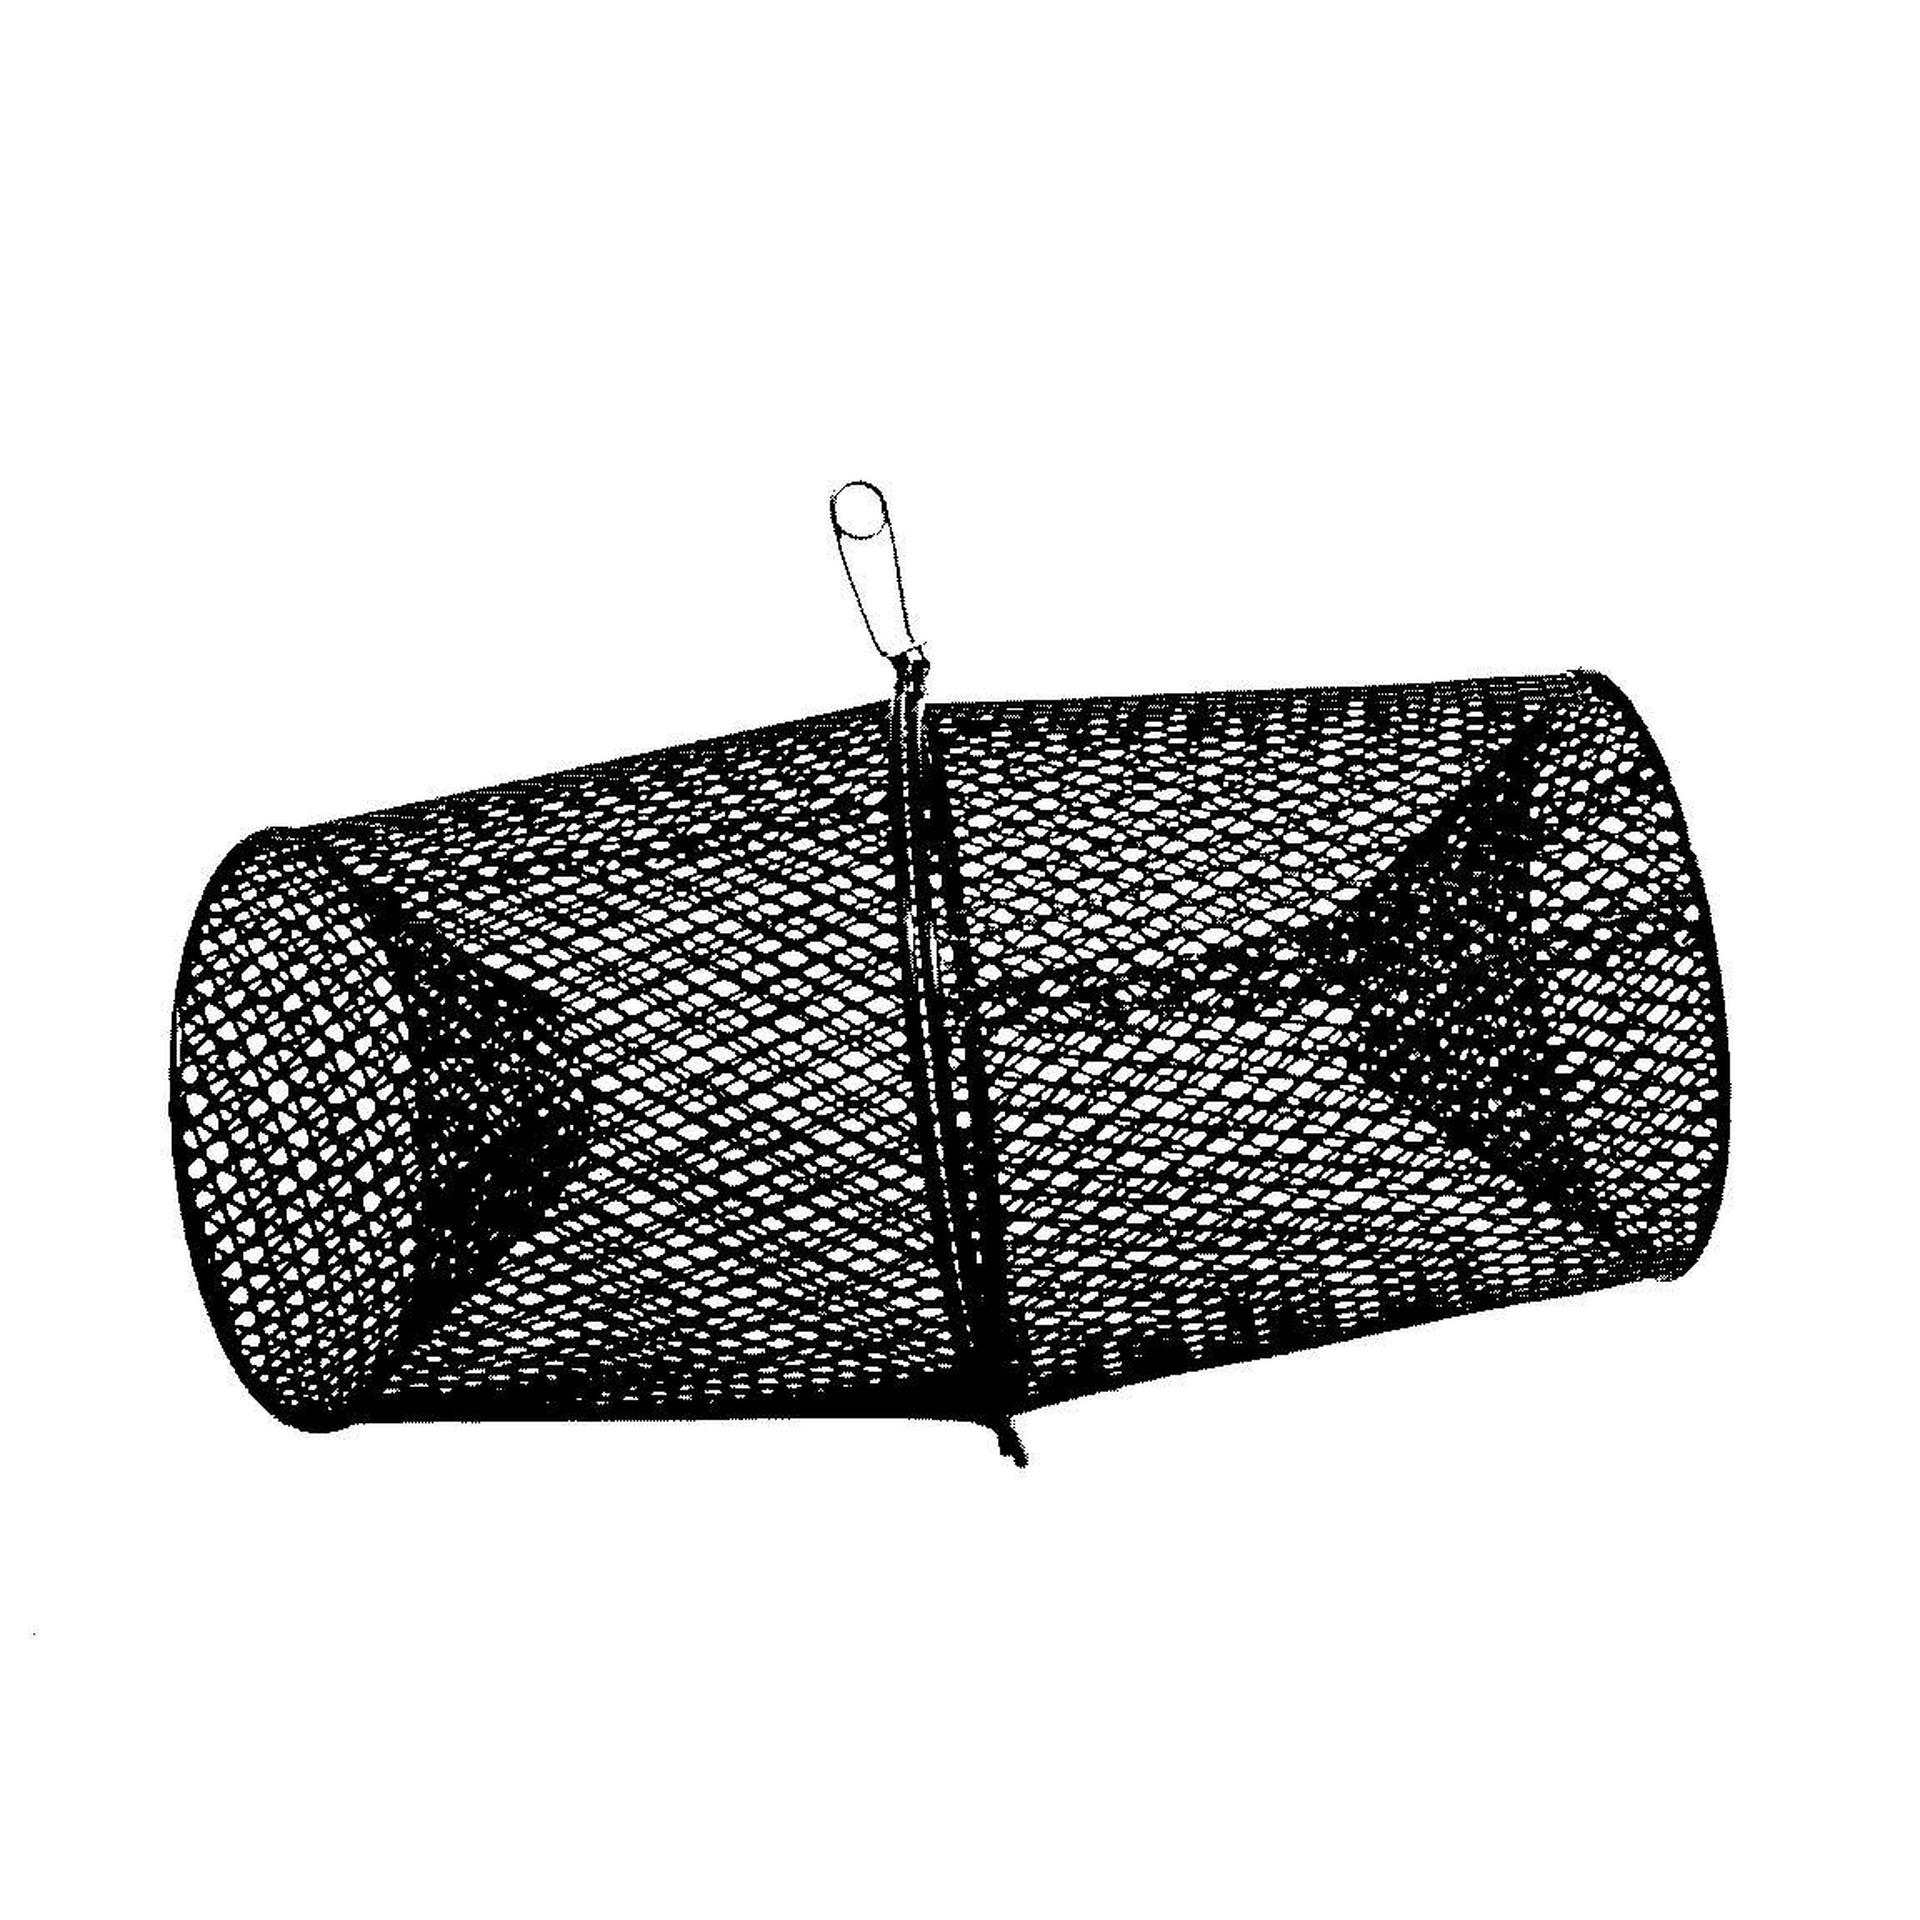 Frabill Umbrella Net | Extra-Large Poly Umbrella Net Designed for Capturing  Bait and Crawfish